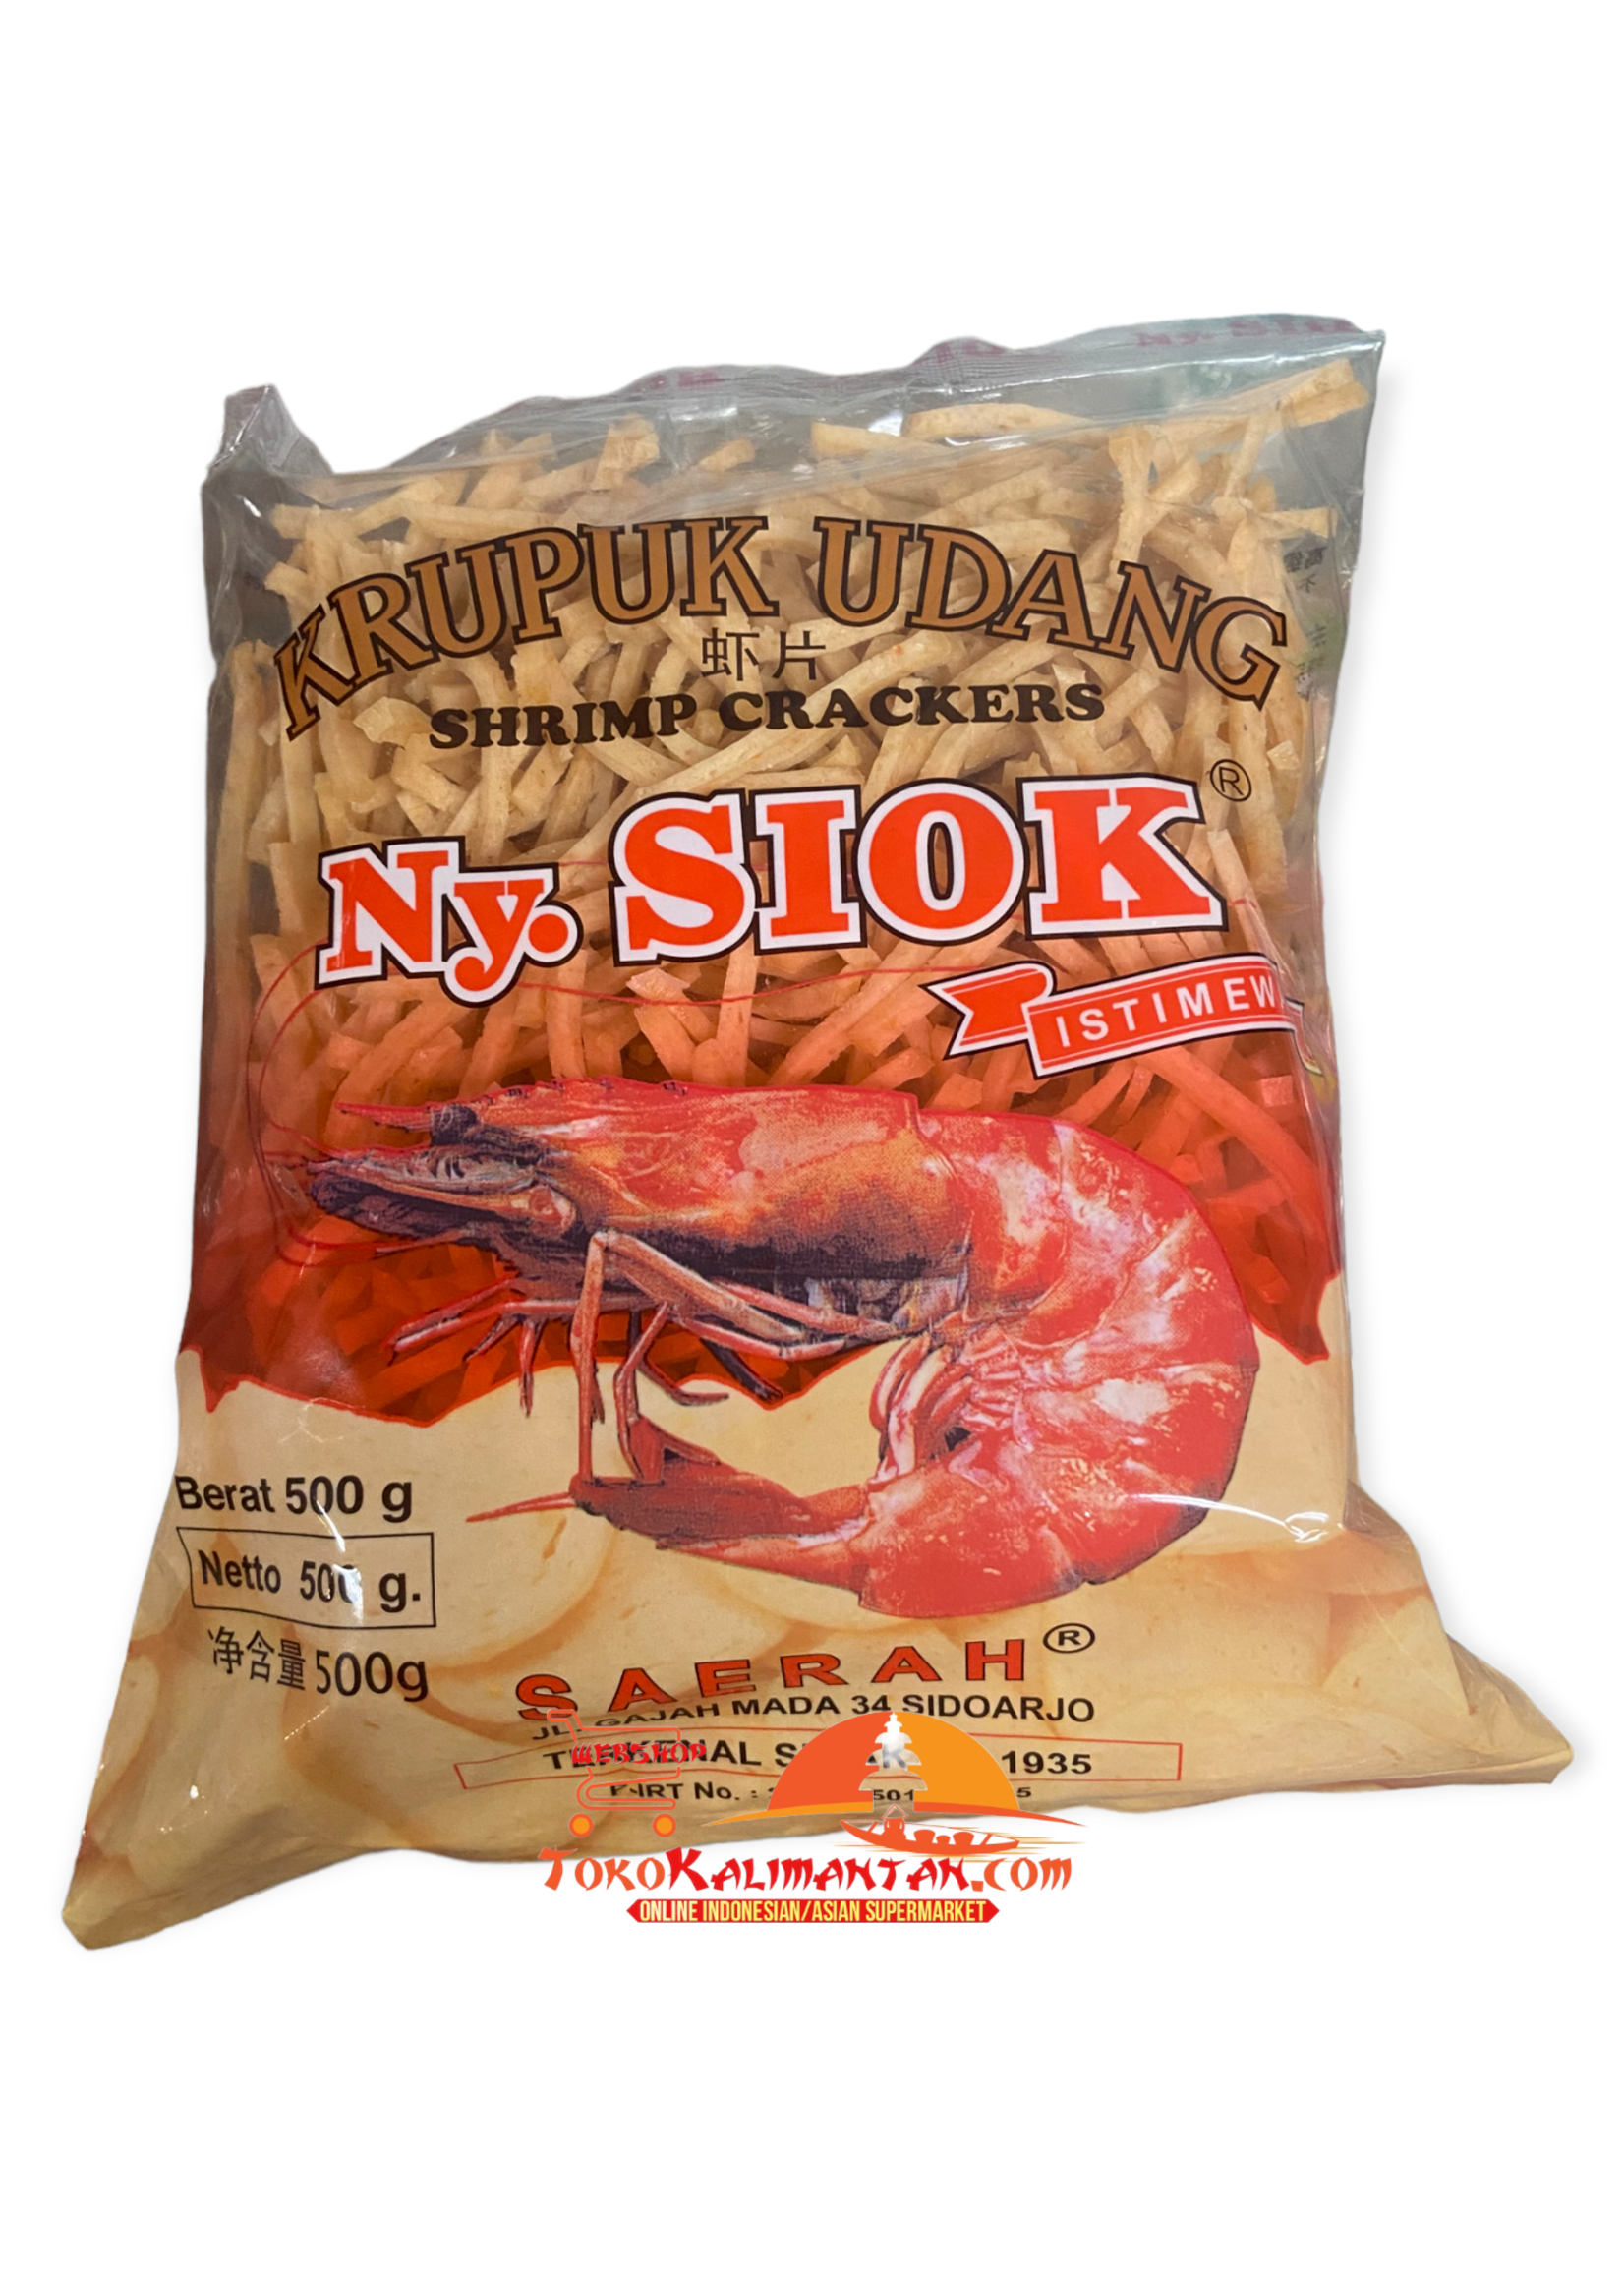 Ny siok Ny siok - Krupuk Udang Shrimp crackers (stik)